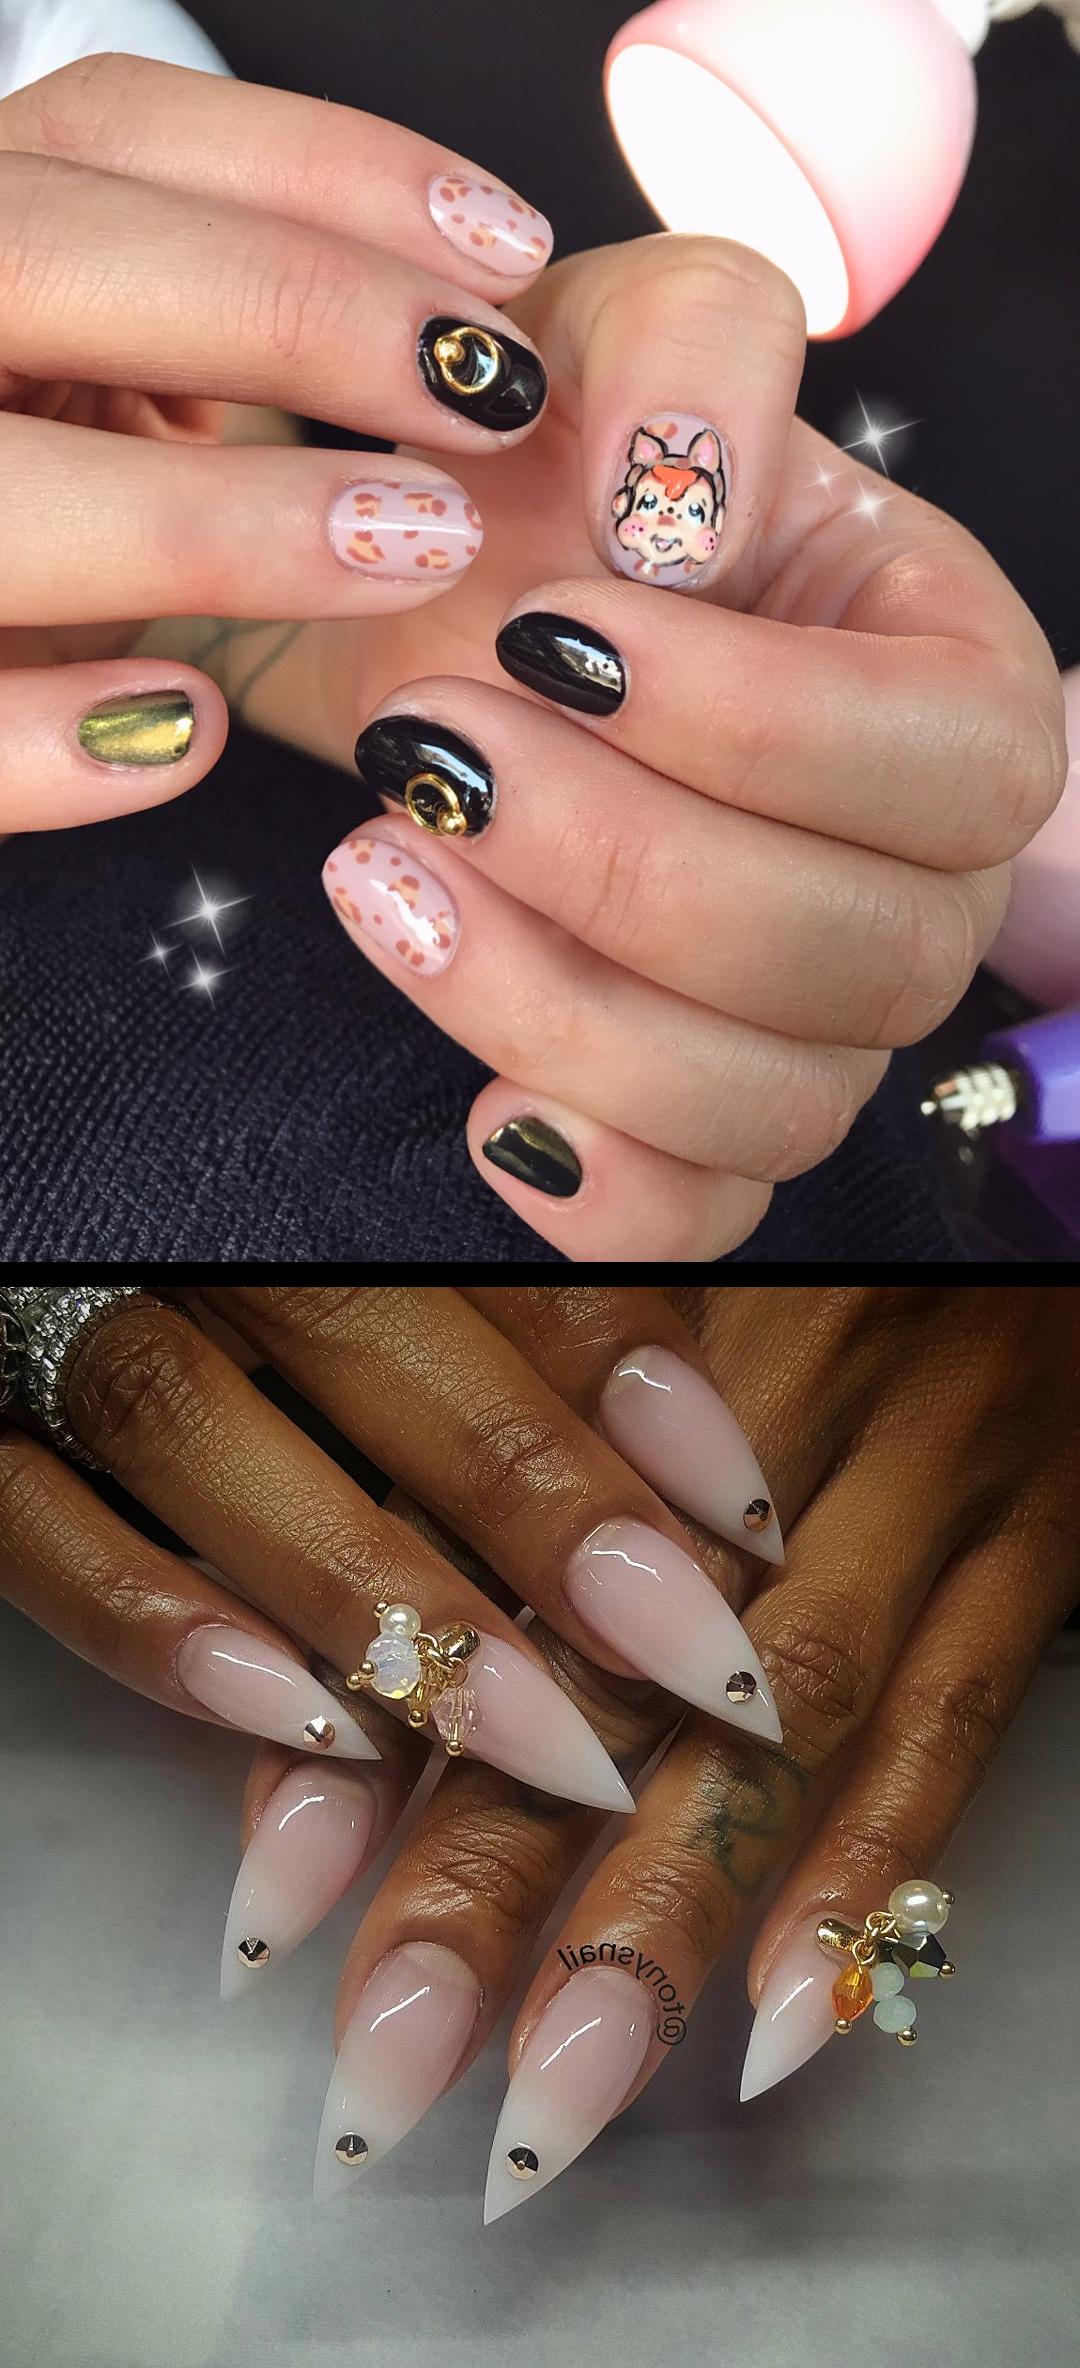 get nails,light pink nails,Si cute bebiti nails!! diseoriginal by me  Ombre nails design , allpowder design by tonysnail  